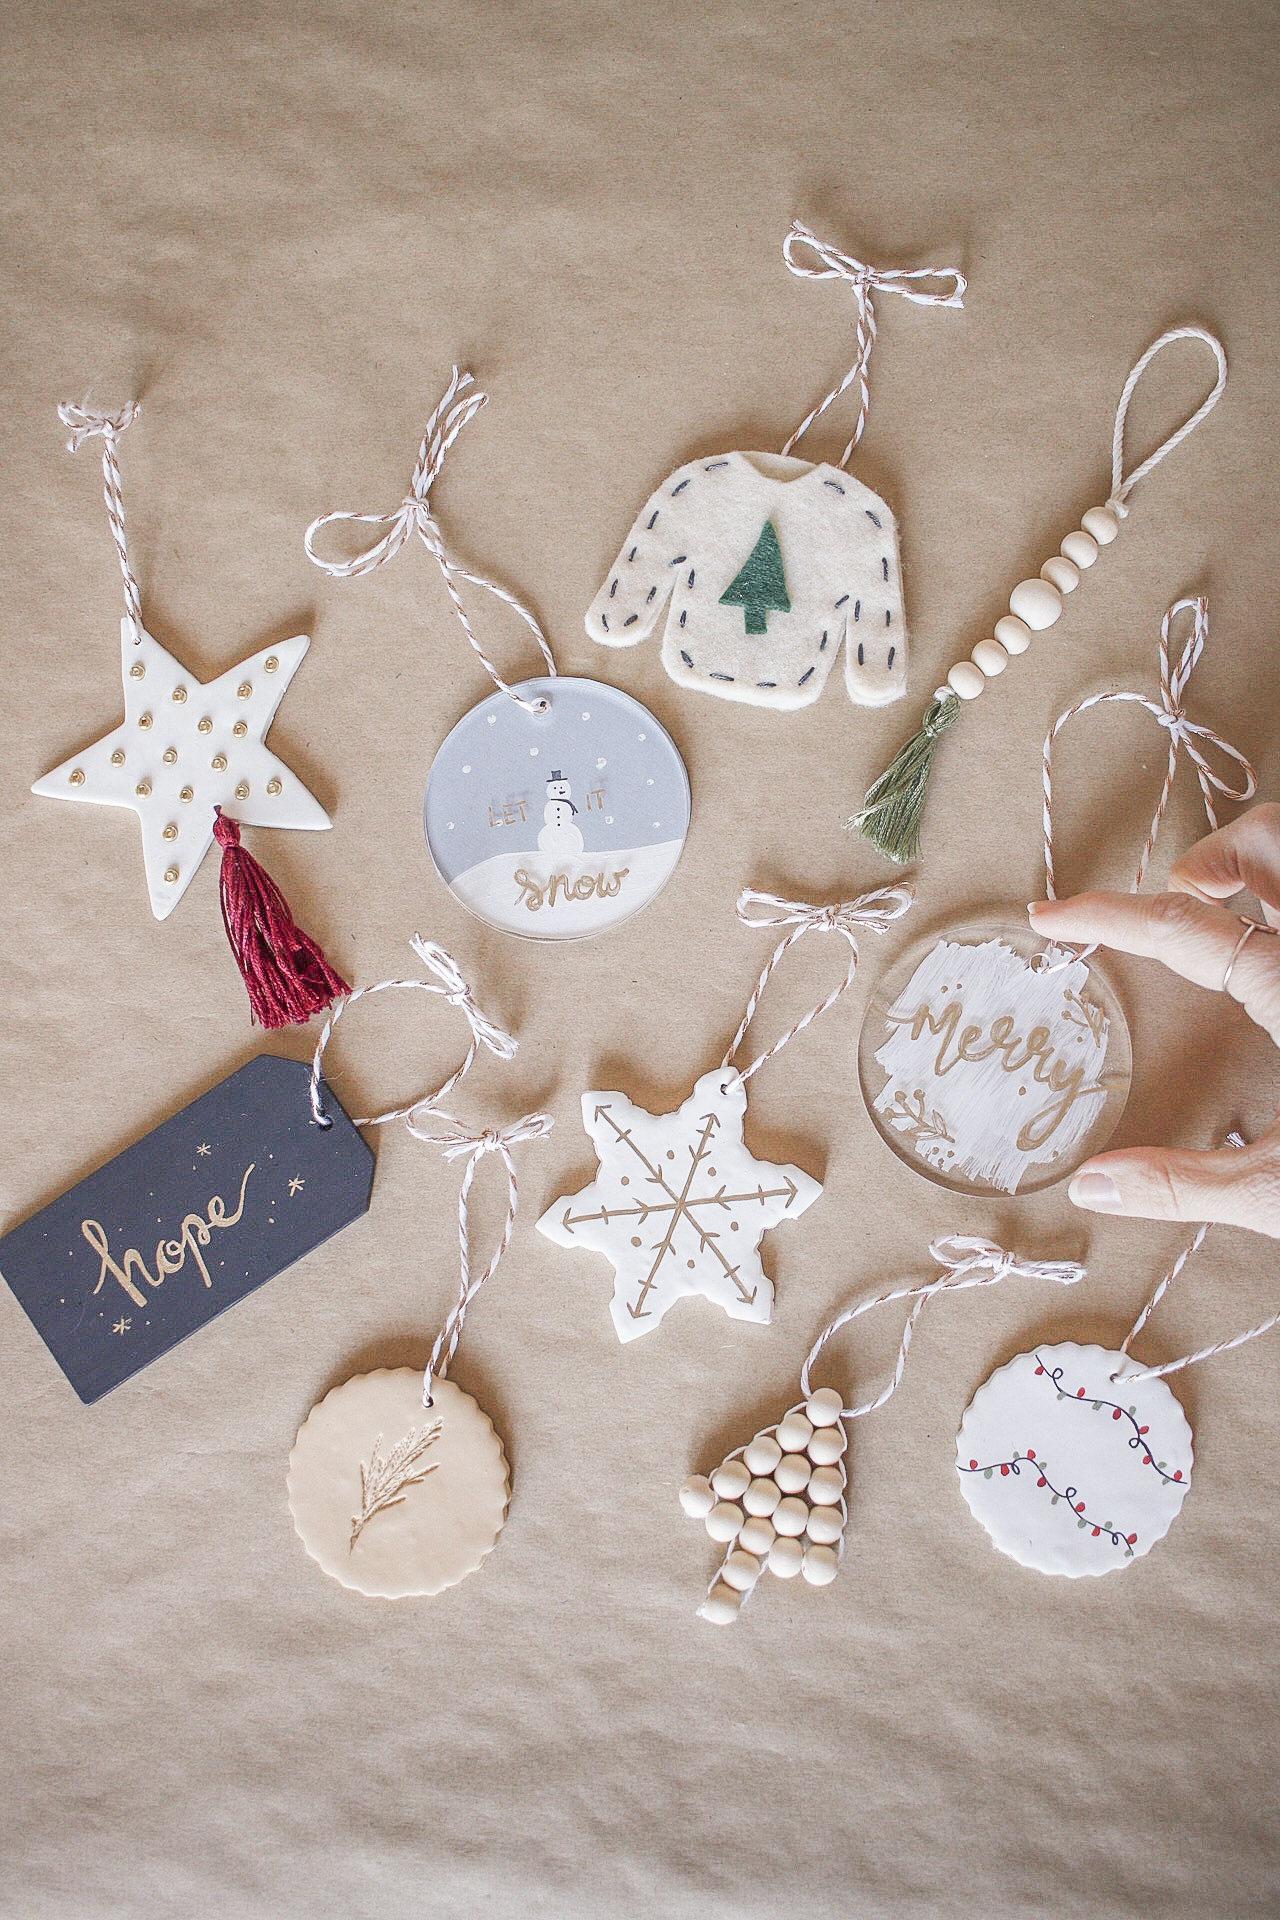 10 Easy DIY Christmas Ornaments - mikyla